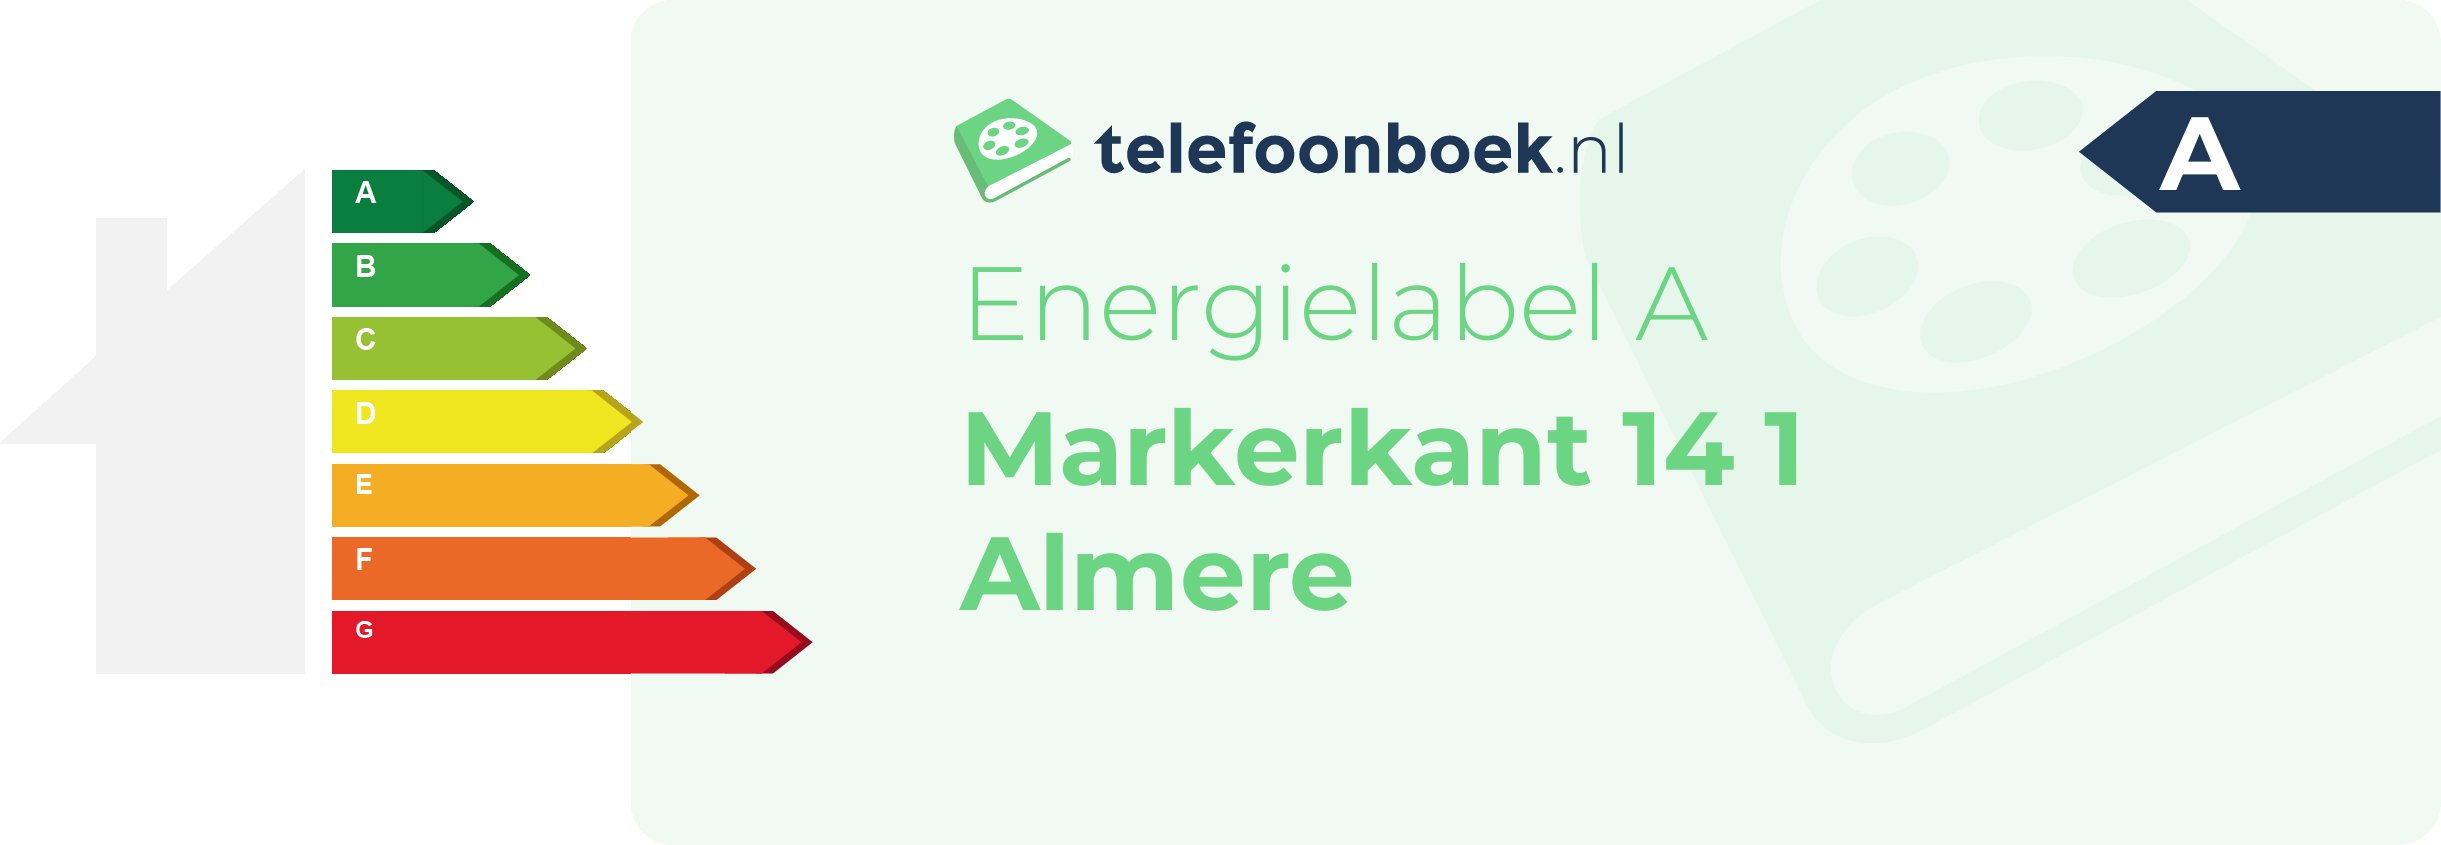 Energielabel Markerkant 14 1 Almere